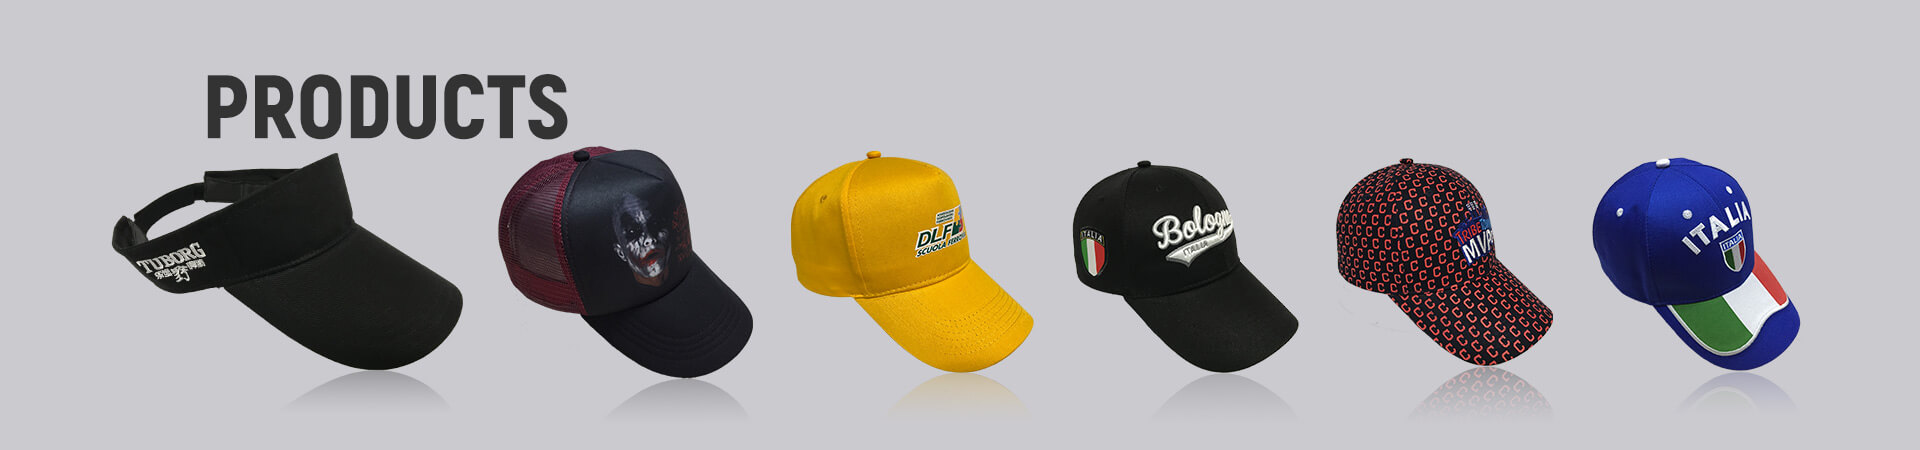 Baseball Cap Archives - Baseball Cap,Sports Cap,Golf Cap,Bucket Hat,Fisherman Hat,Trucker Hat